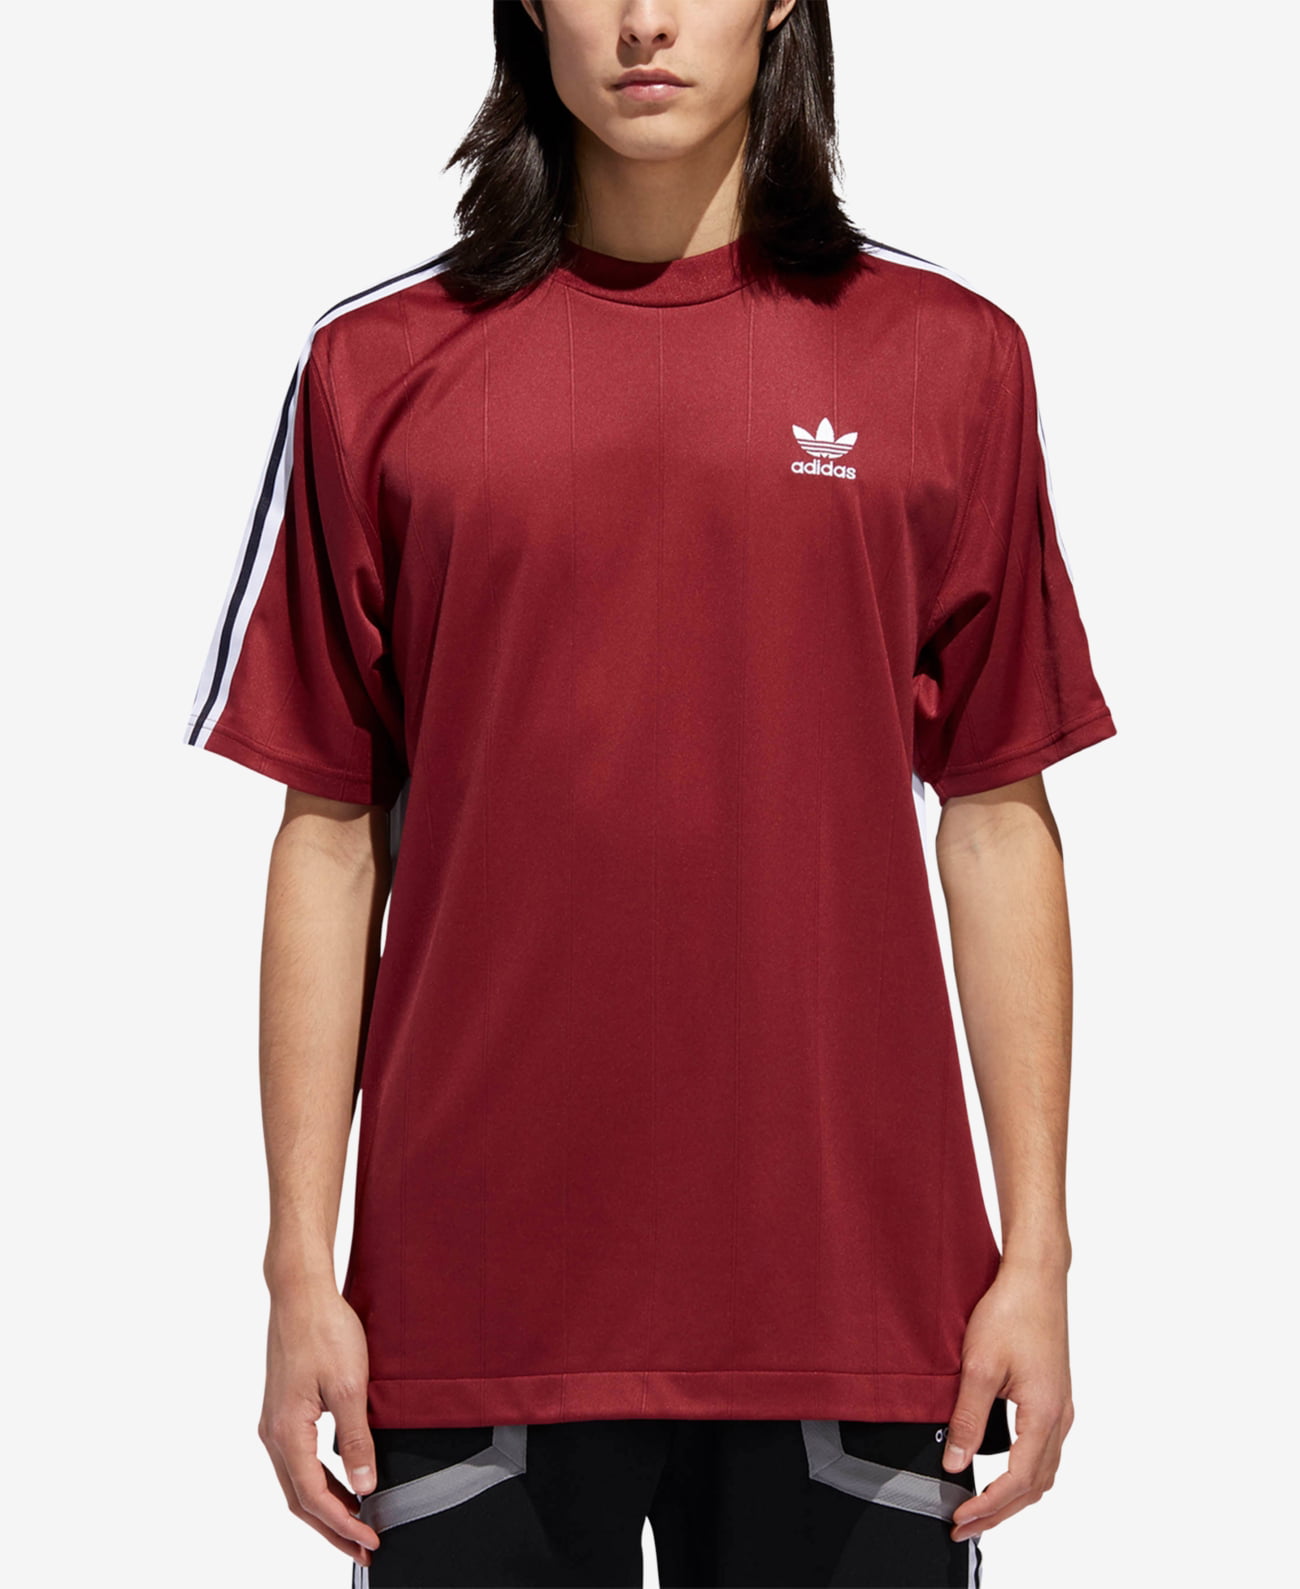 Originals B-Side T-Shirt (Medium Red, XXL) - Walmart.com